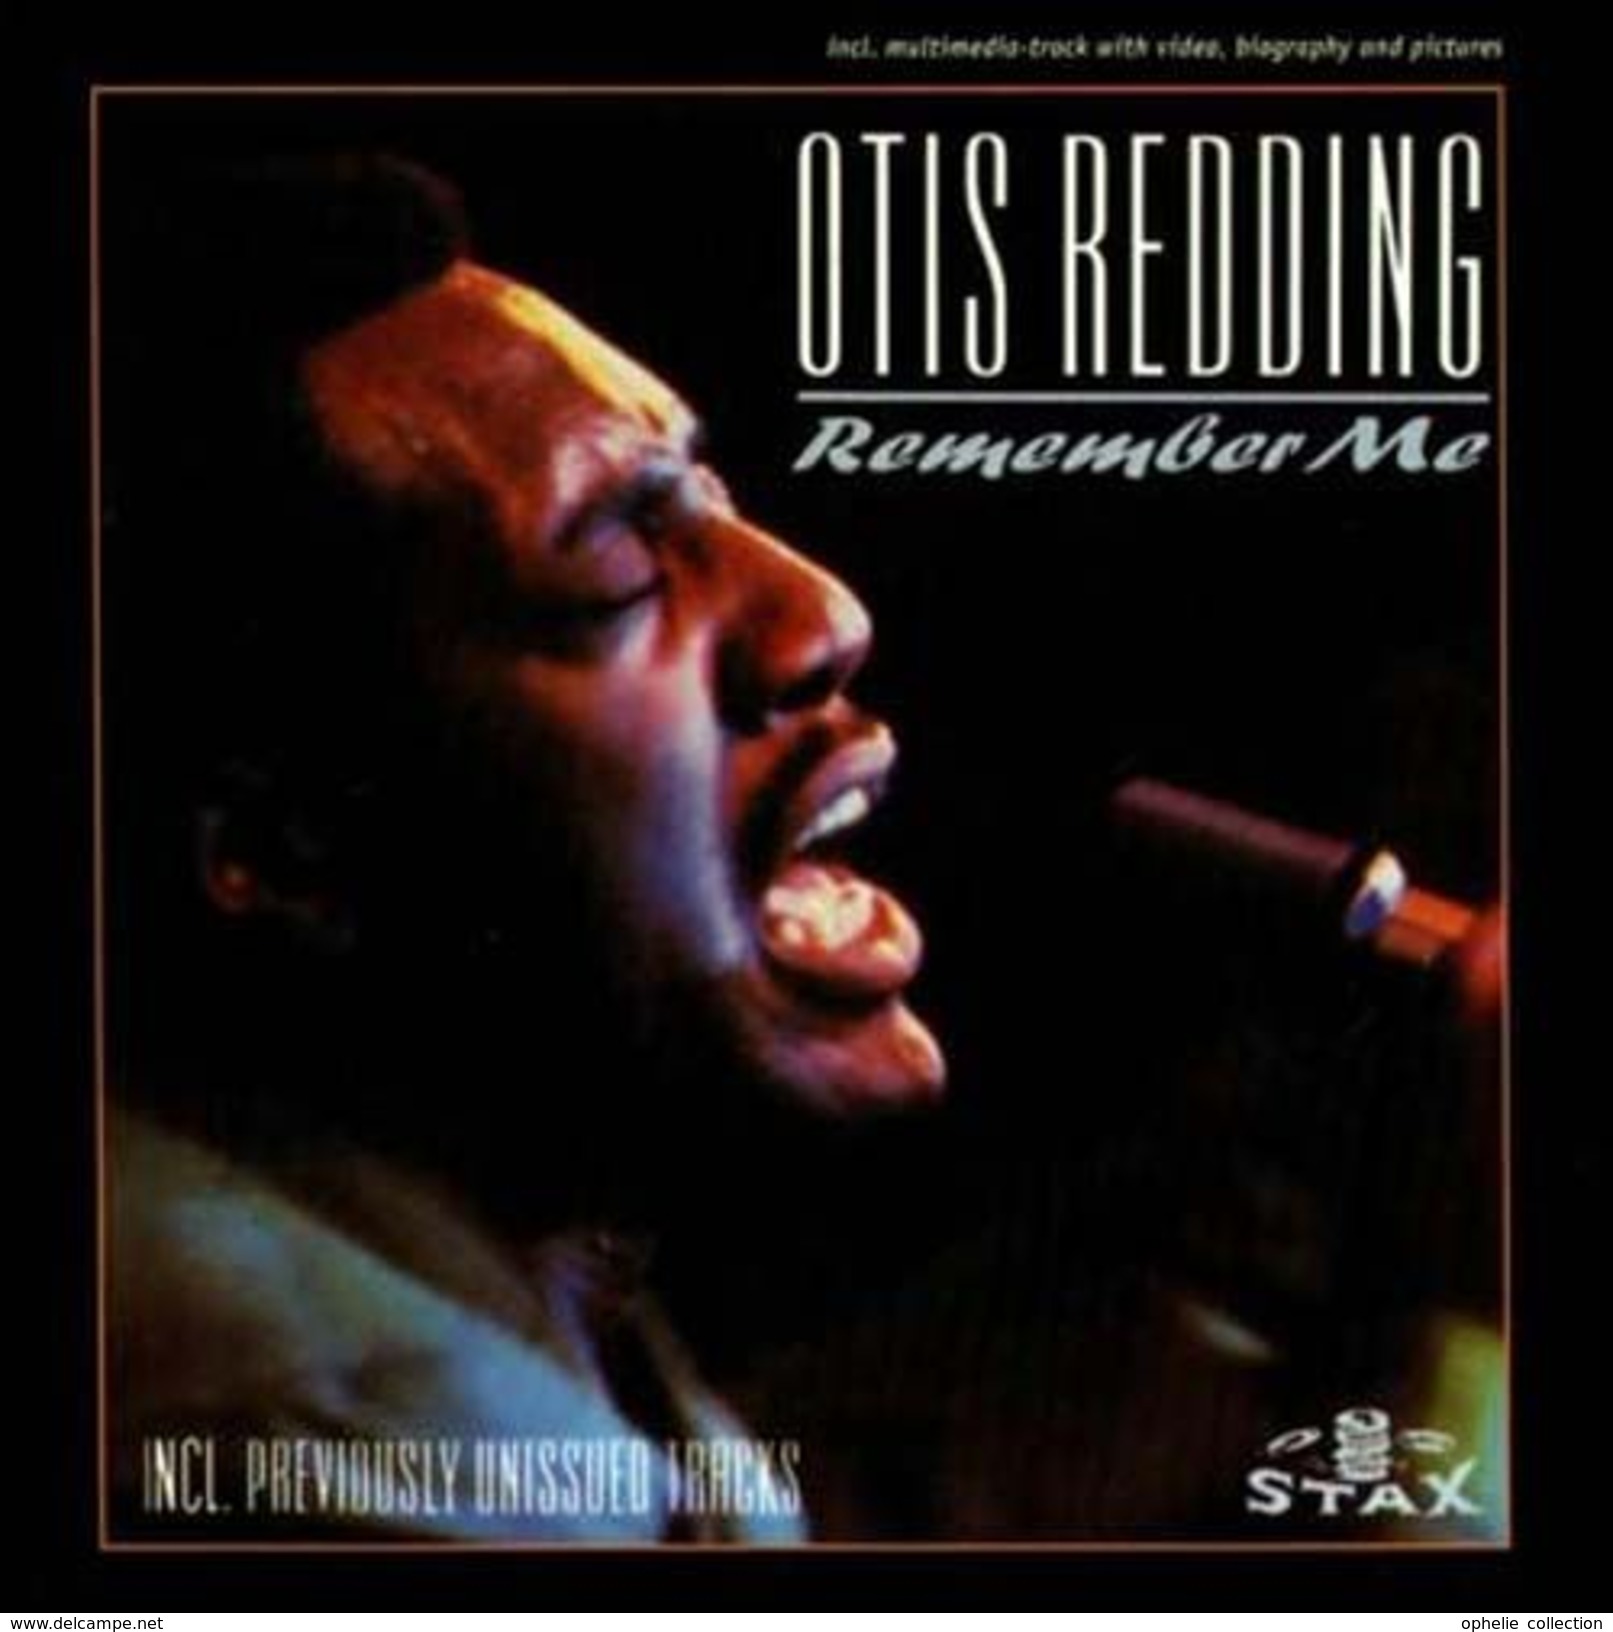 Remember Me Otis Redding - Soul - R&B